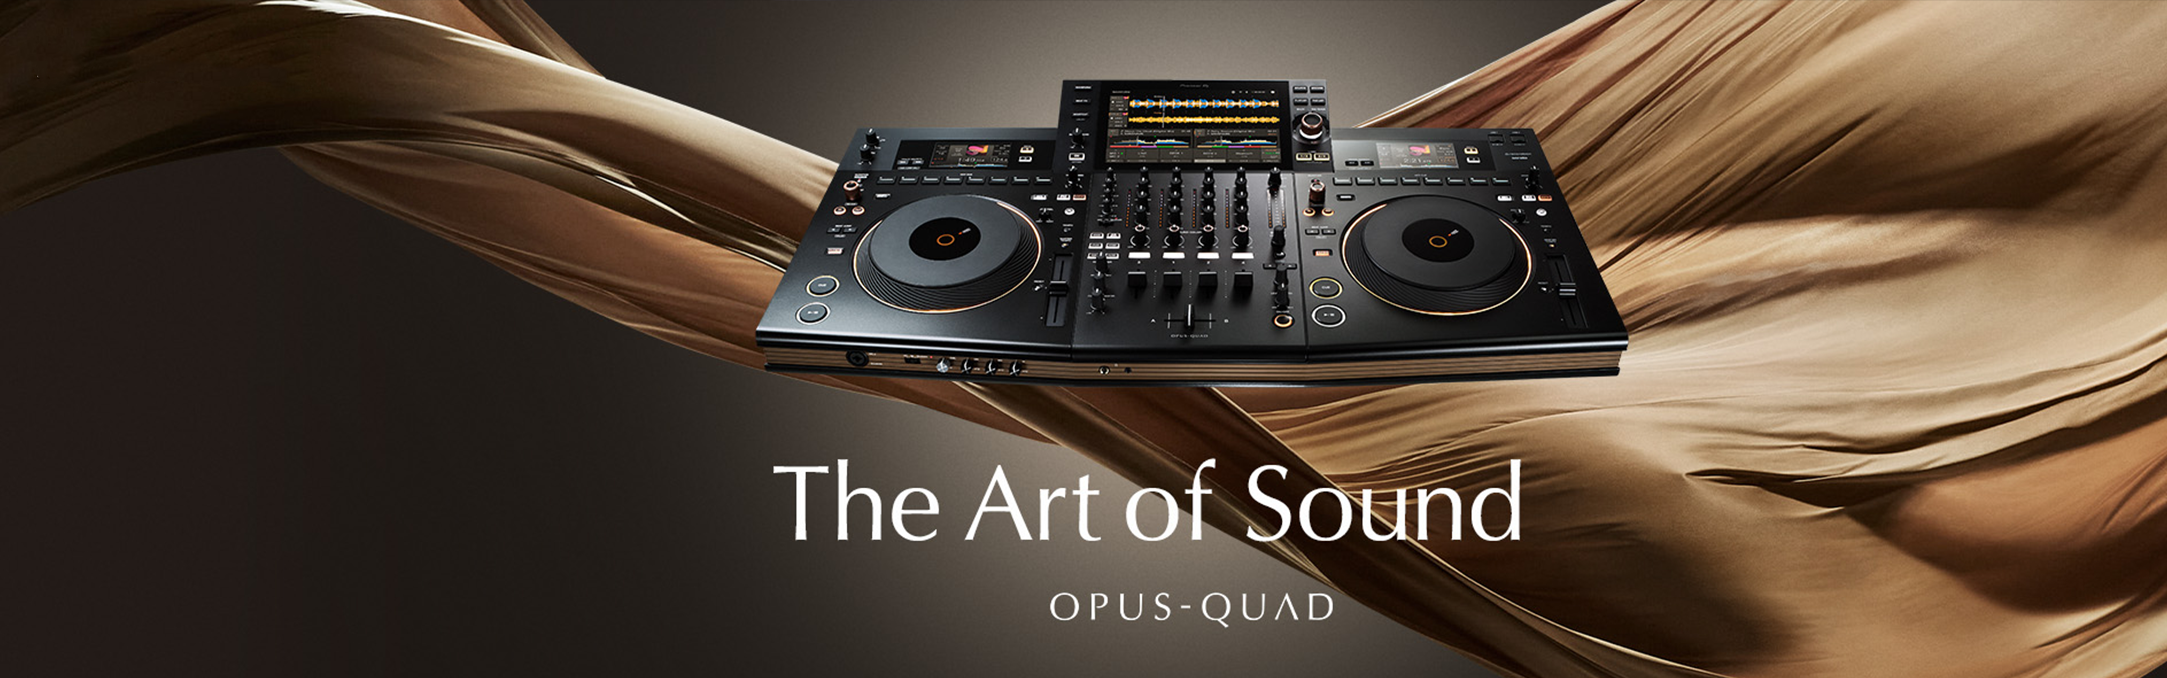 Pioneer Dj Opus Quad İle Tanışın!